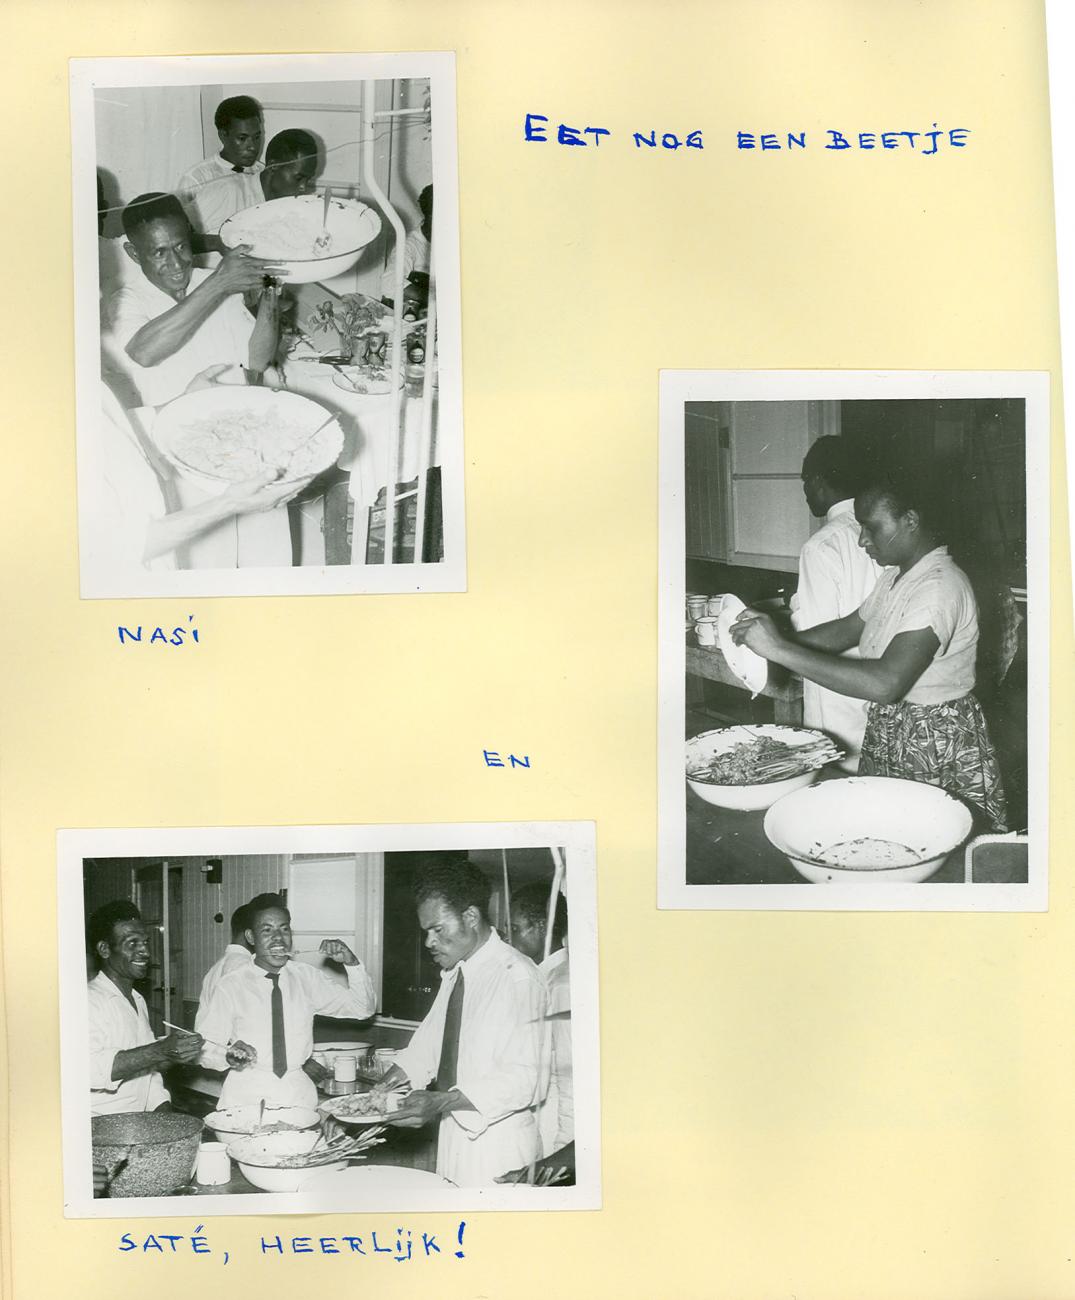 BD/83/34 - 
Dinner at colonized Sarmi: nasi and satay
